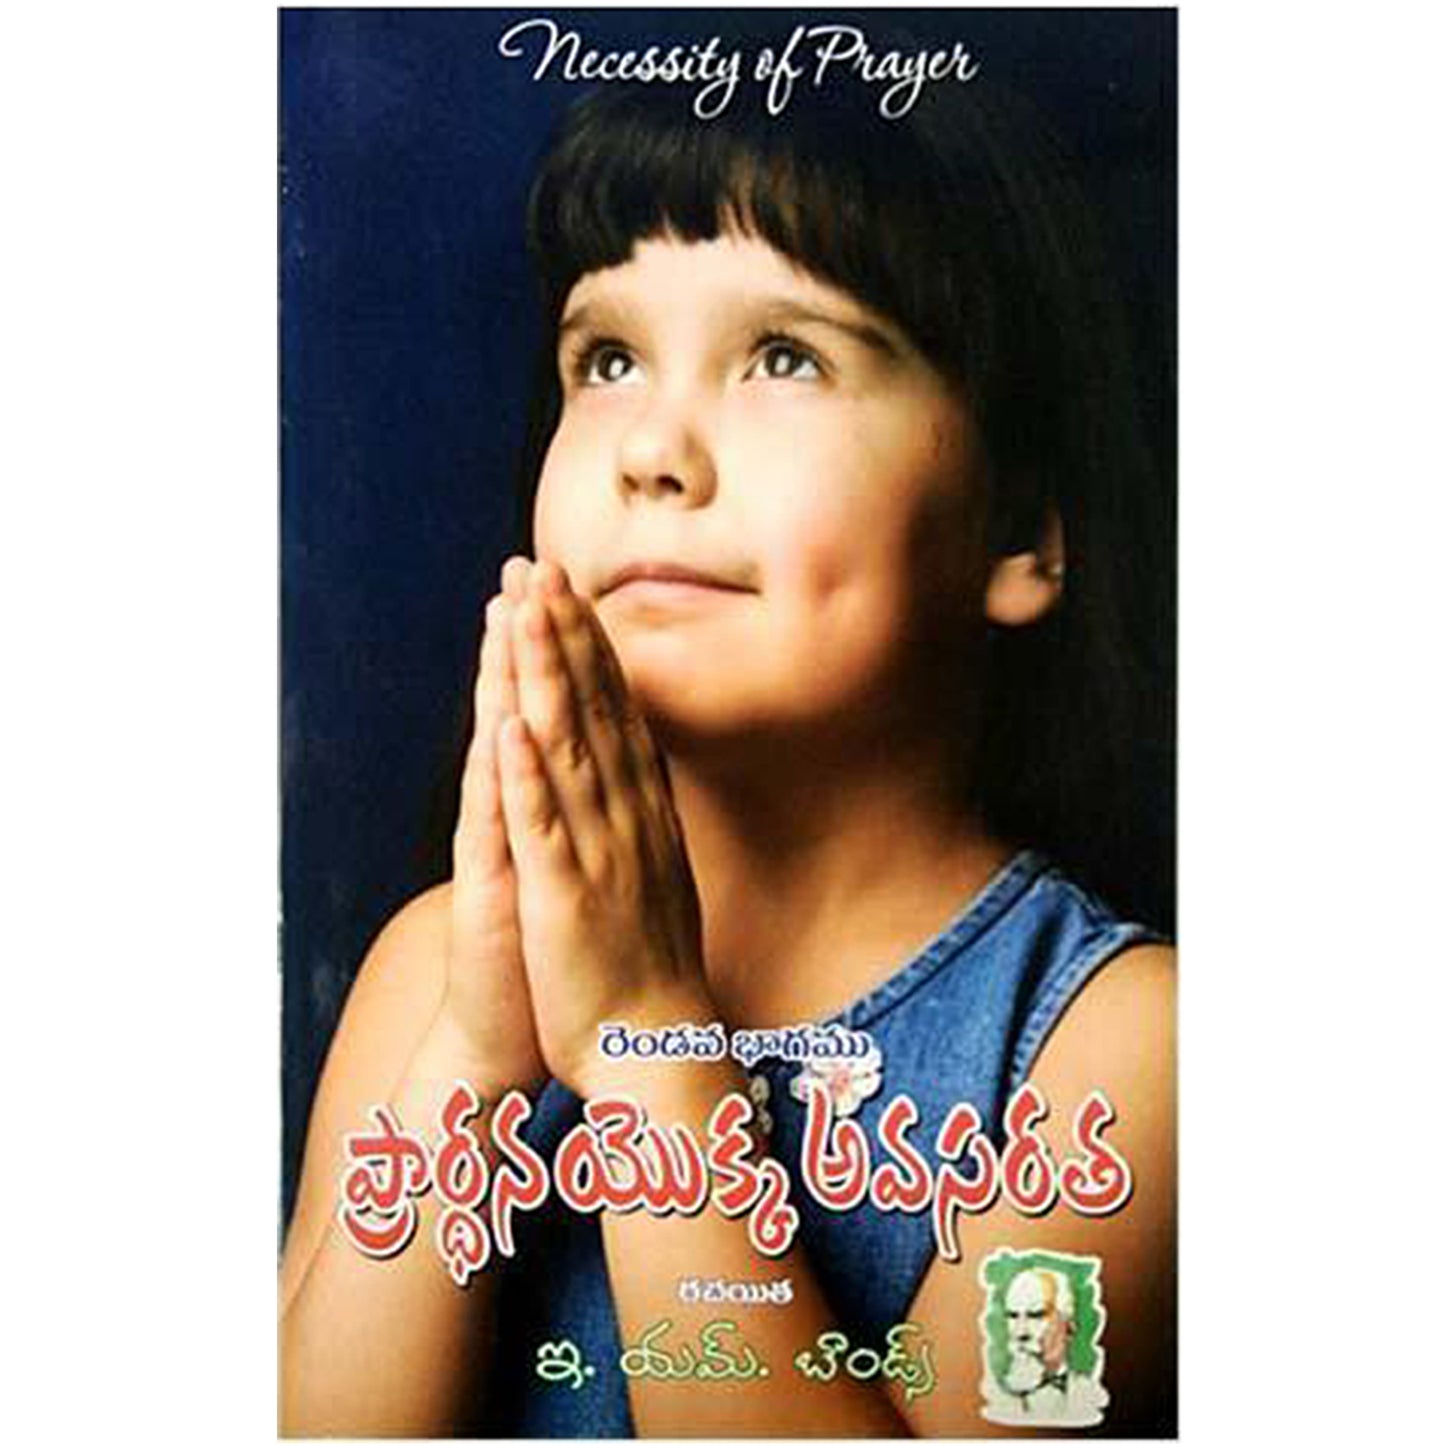 The necessity of prayer by E.M. Bounds | Secound Part | Telugu christian books